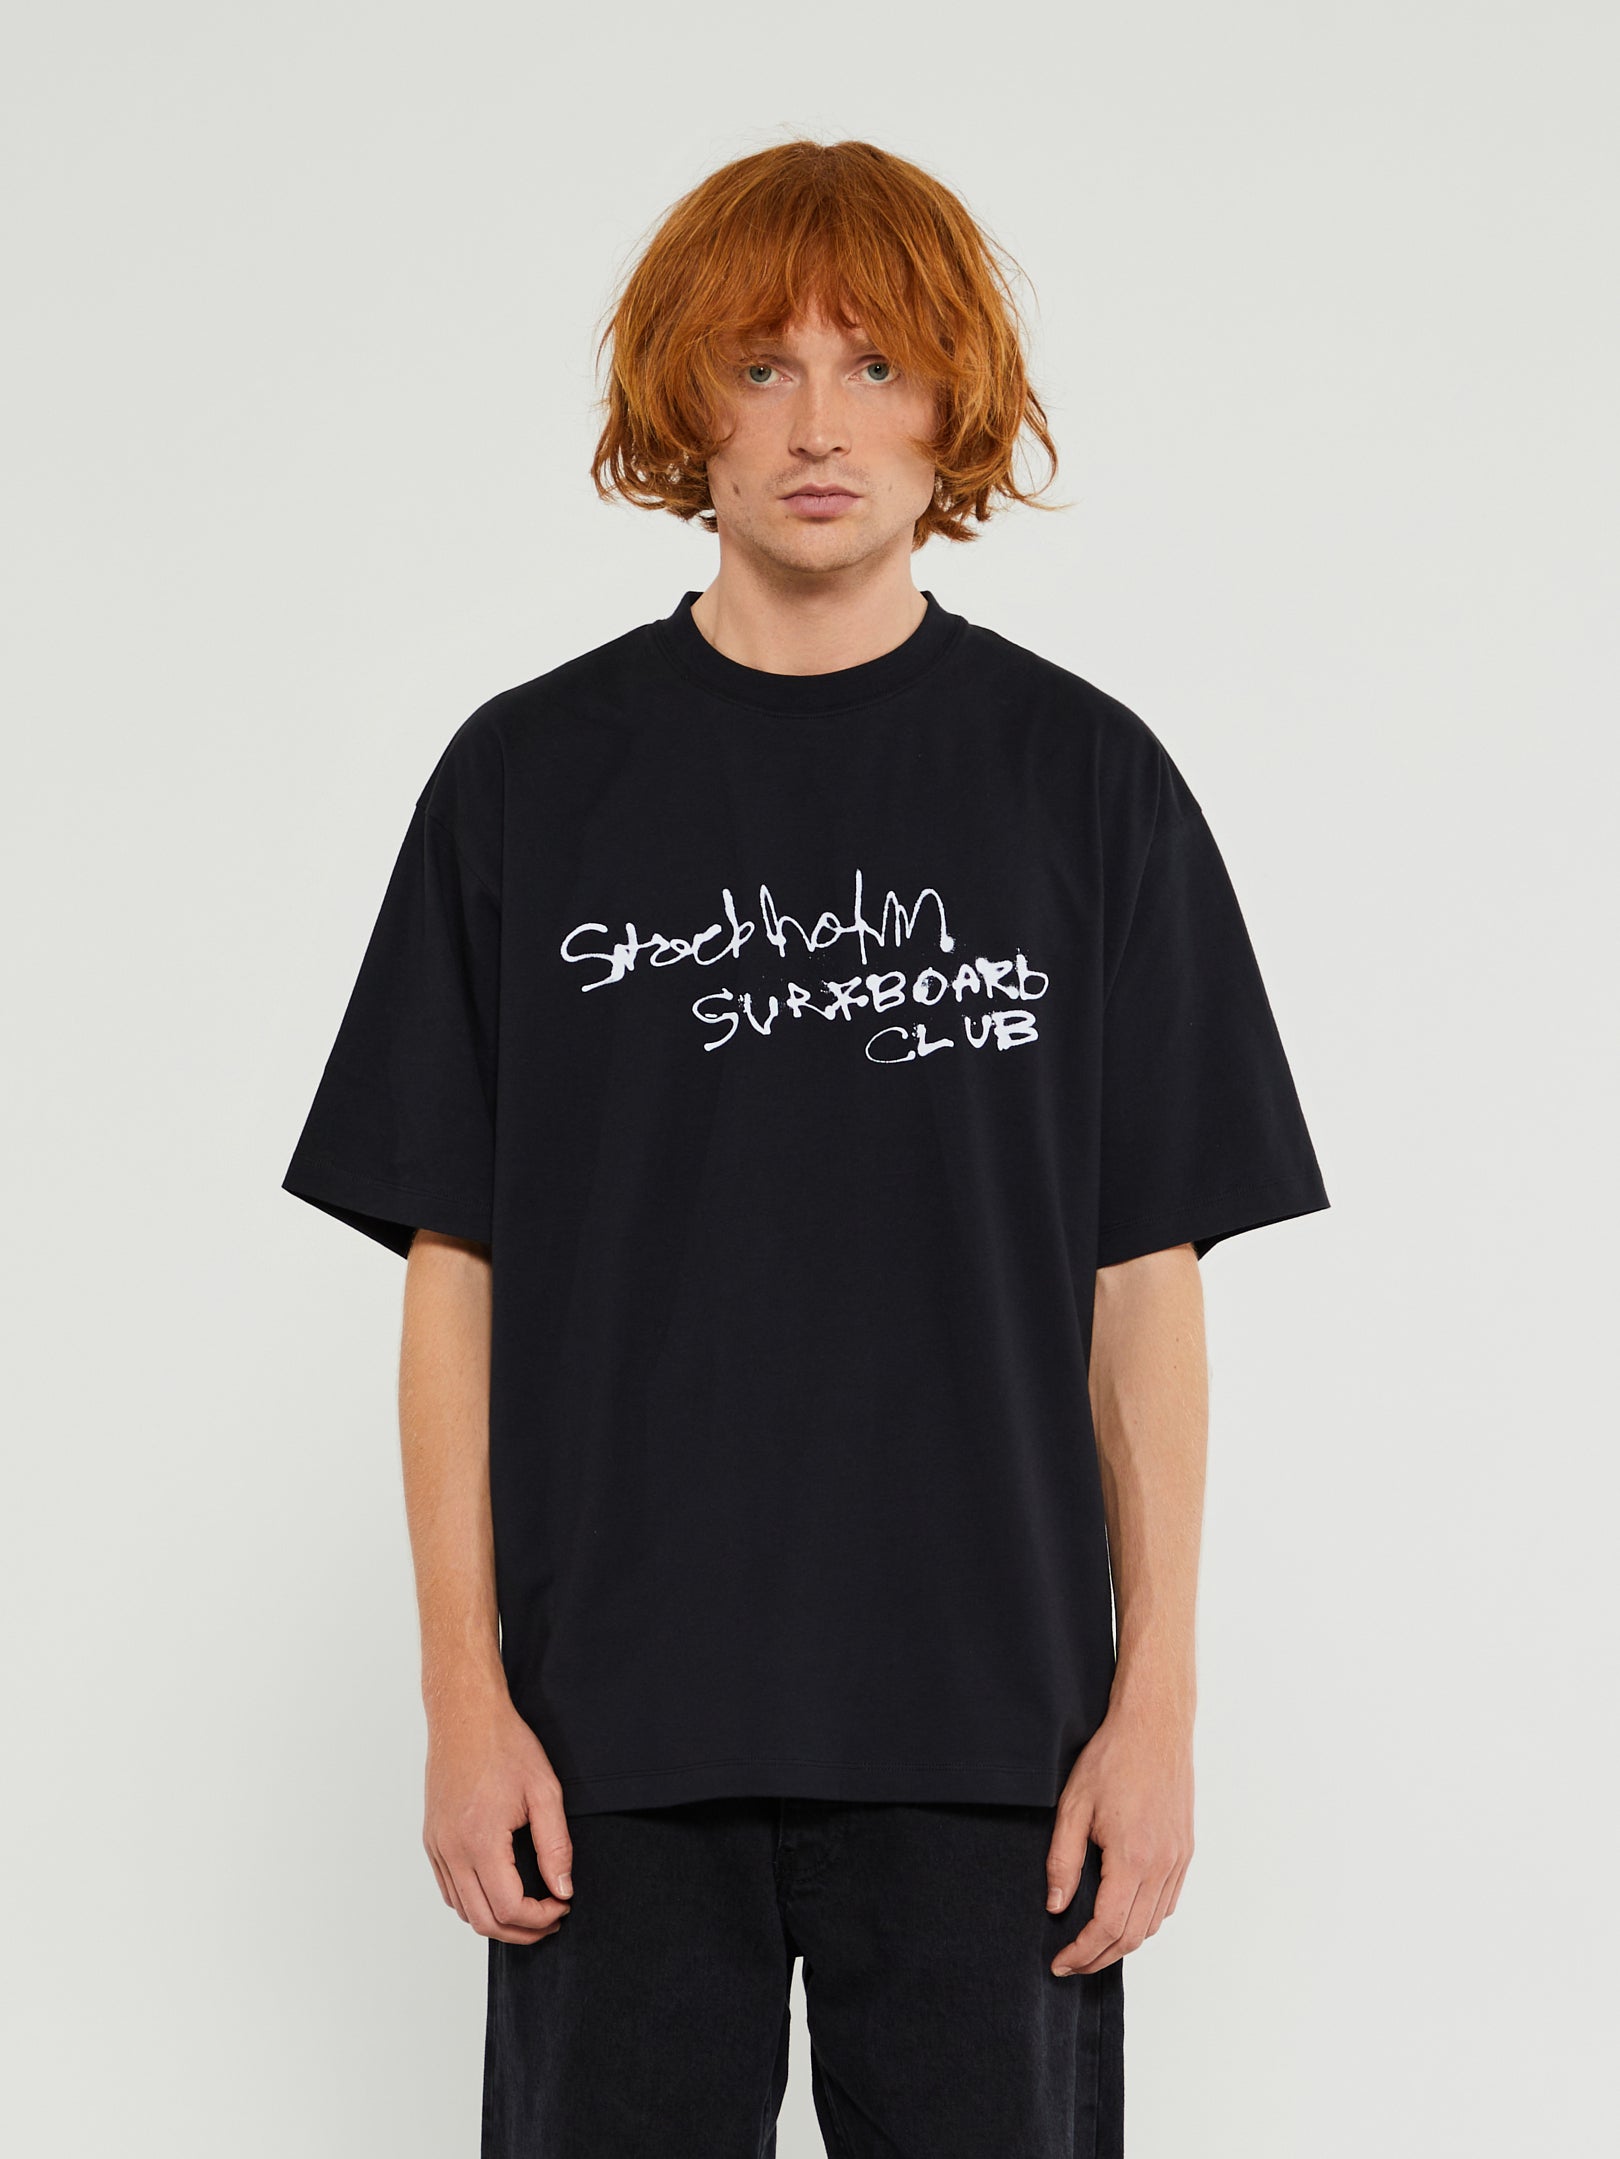 Stockholm (Surfboard) Club - Kil Airbrush T-Shirt in Black